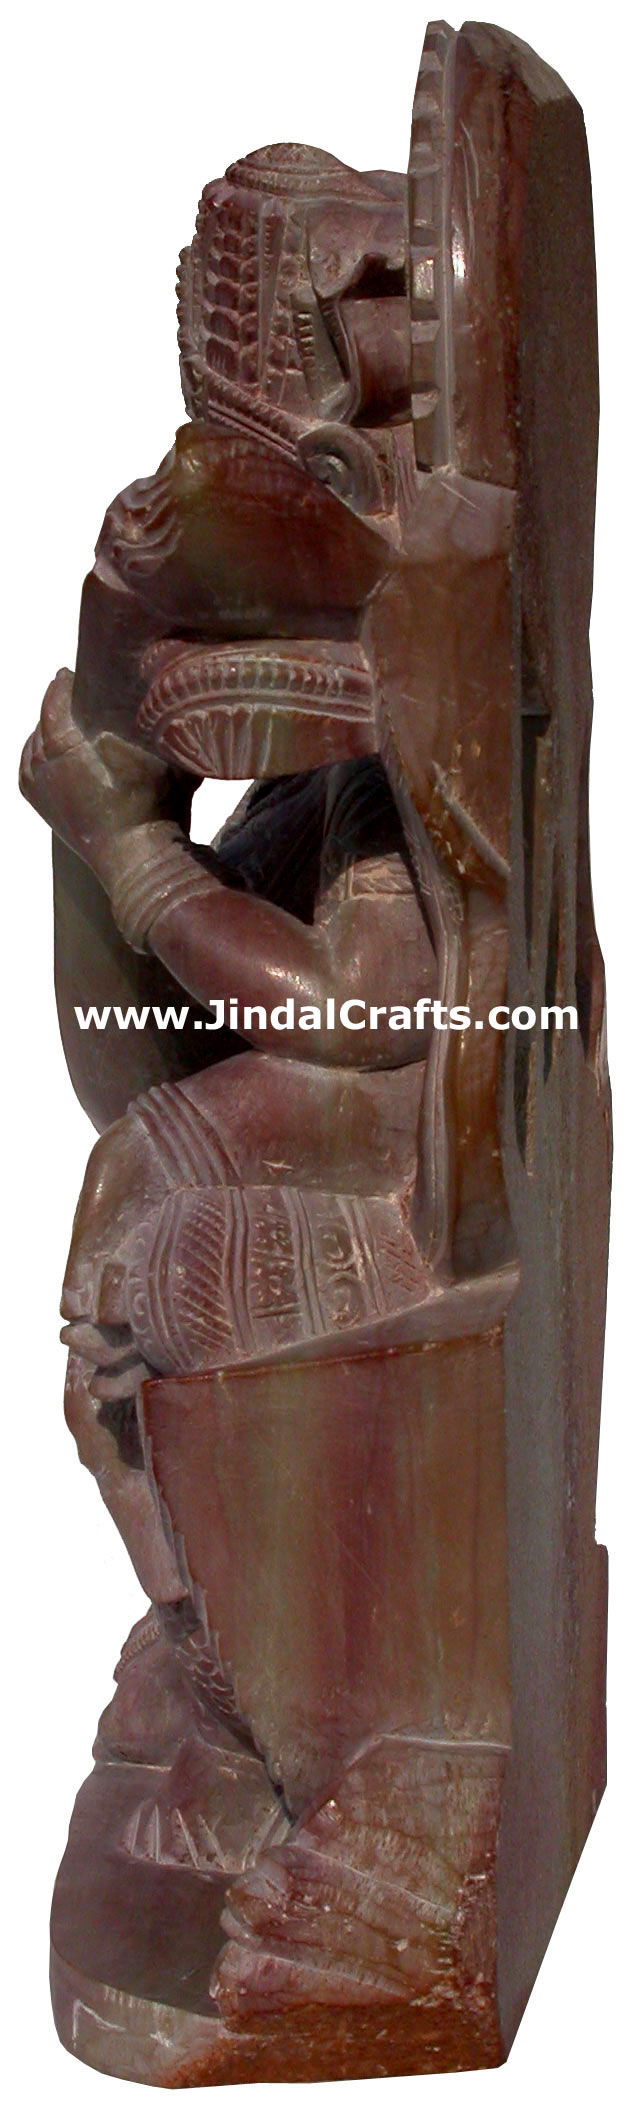 Hindu Deities Goddess Saraswati India Stone Carving Art